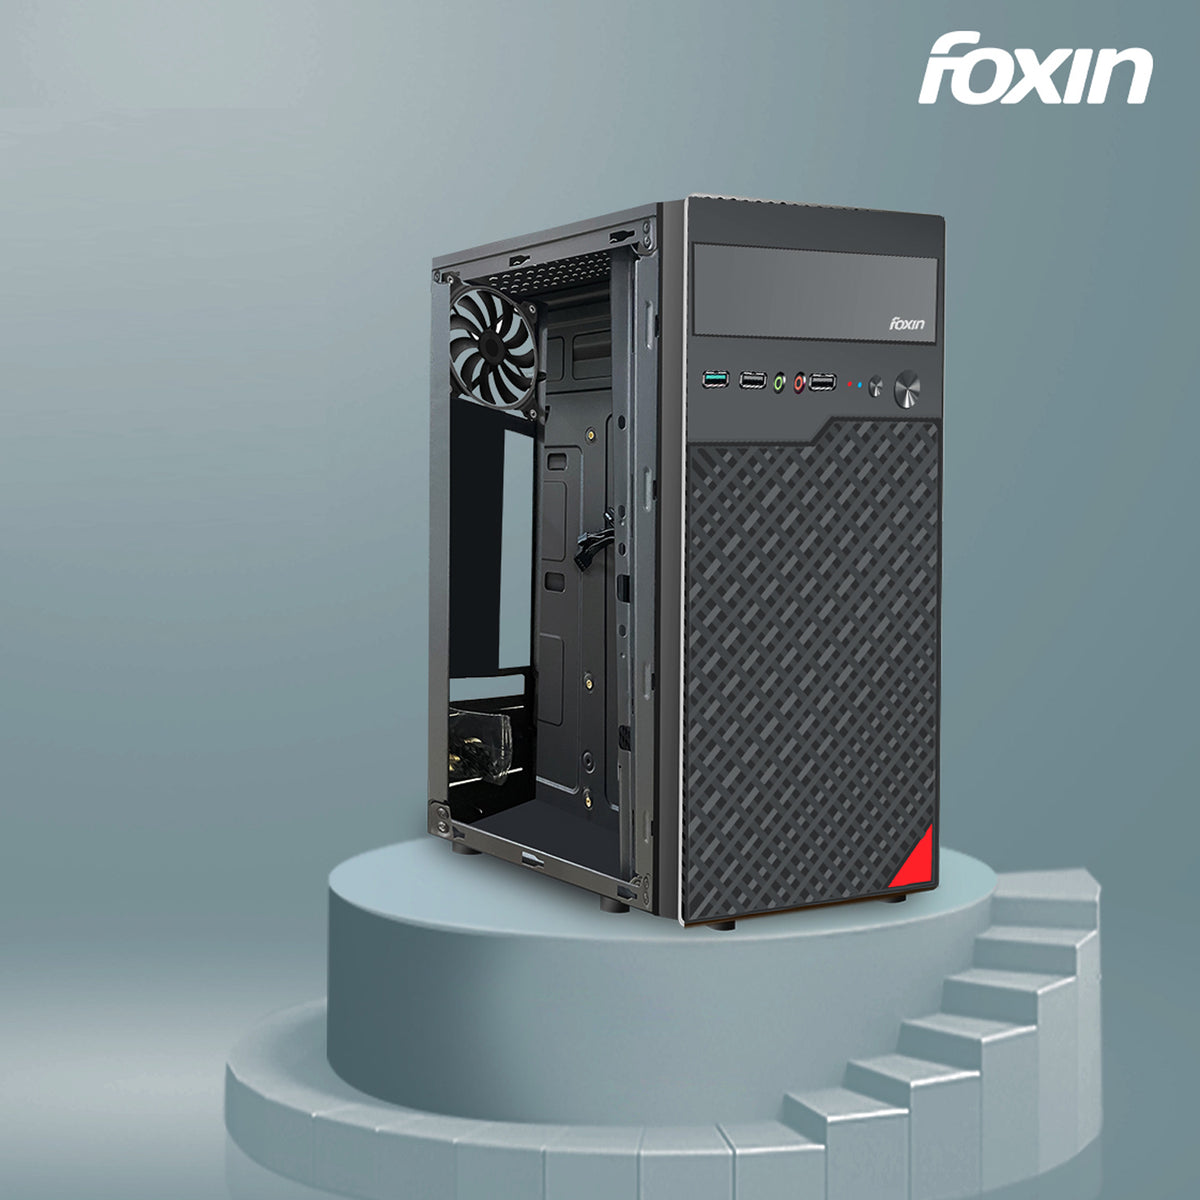 Foxin PACE Desktop Computer Case / PC Cabinet - with Steel Metal Body | Front Panel 2 x USB 1.0 Port | HD Audio/ MIC Jack Port  | 8 CM /12 CM Fan Position | Color Metallic Black